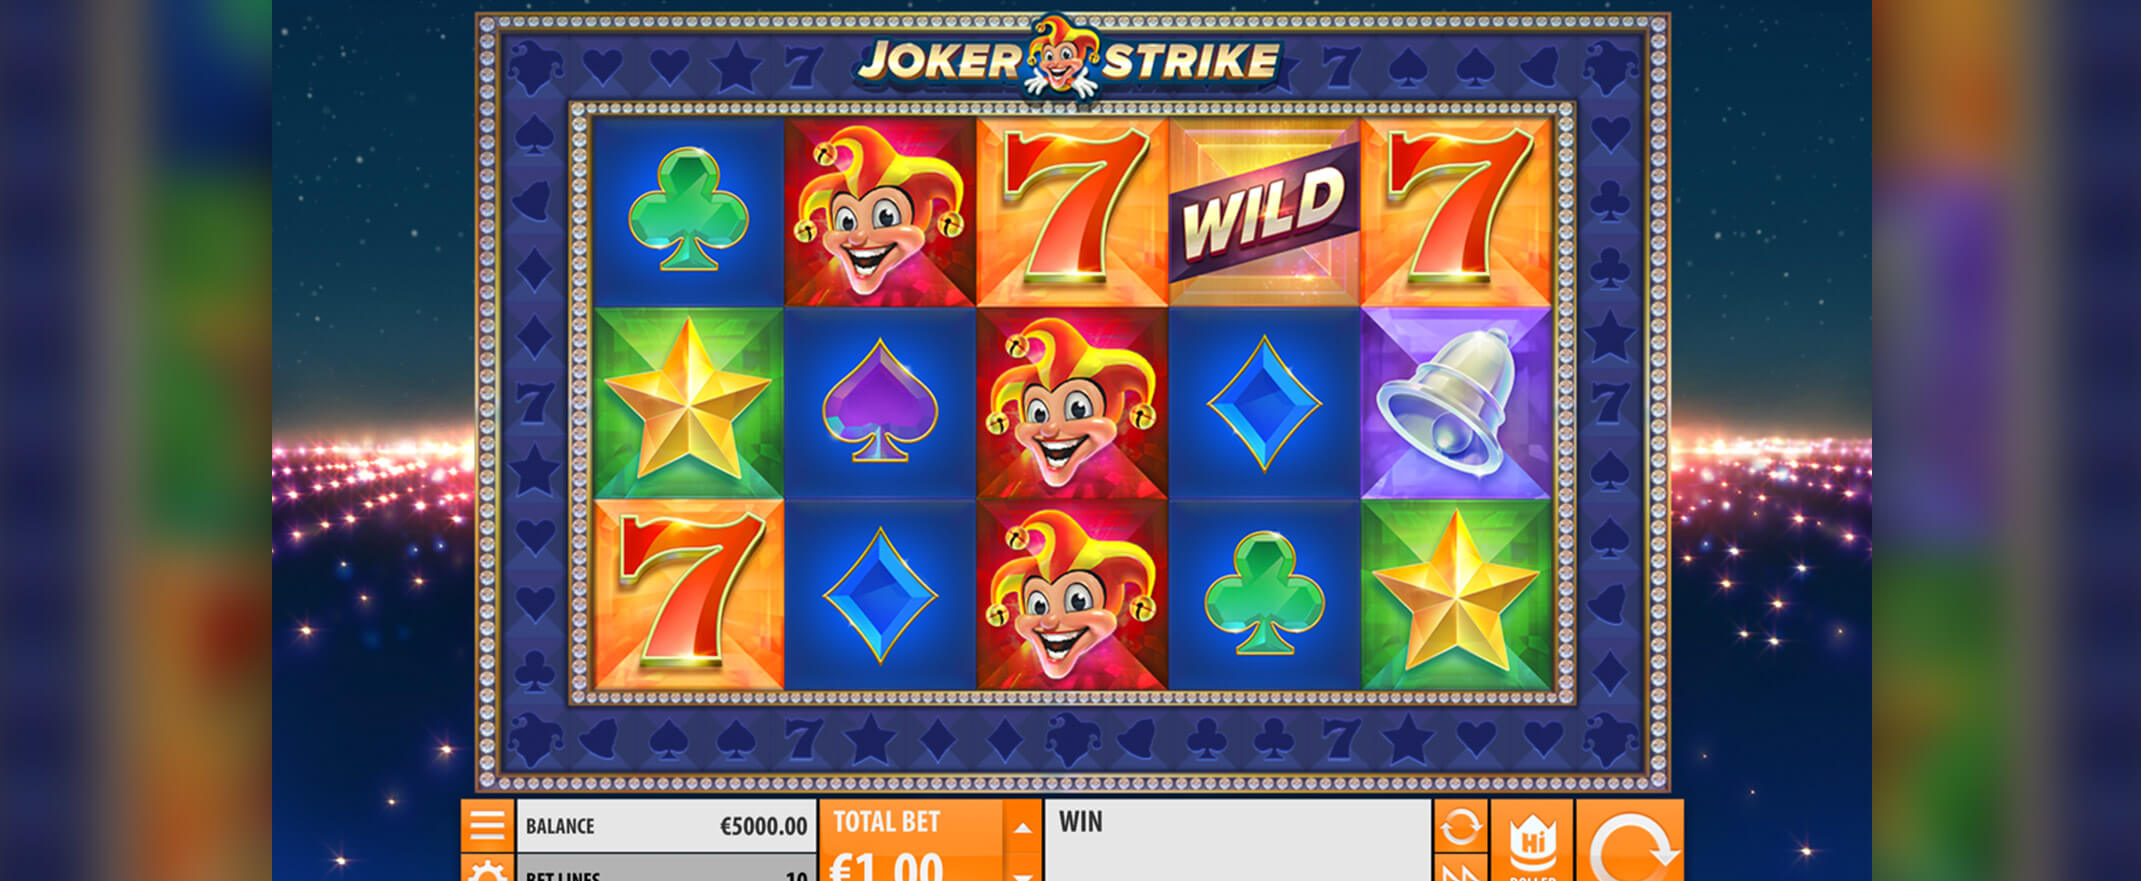 Joker Strike Spilleautomat